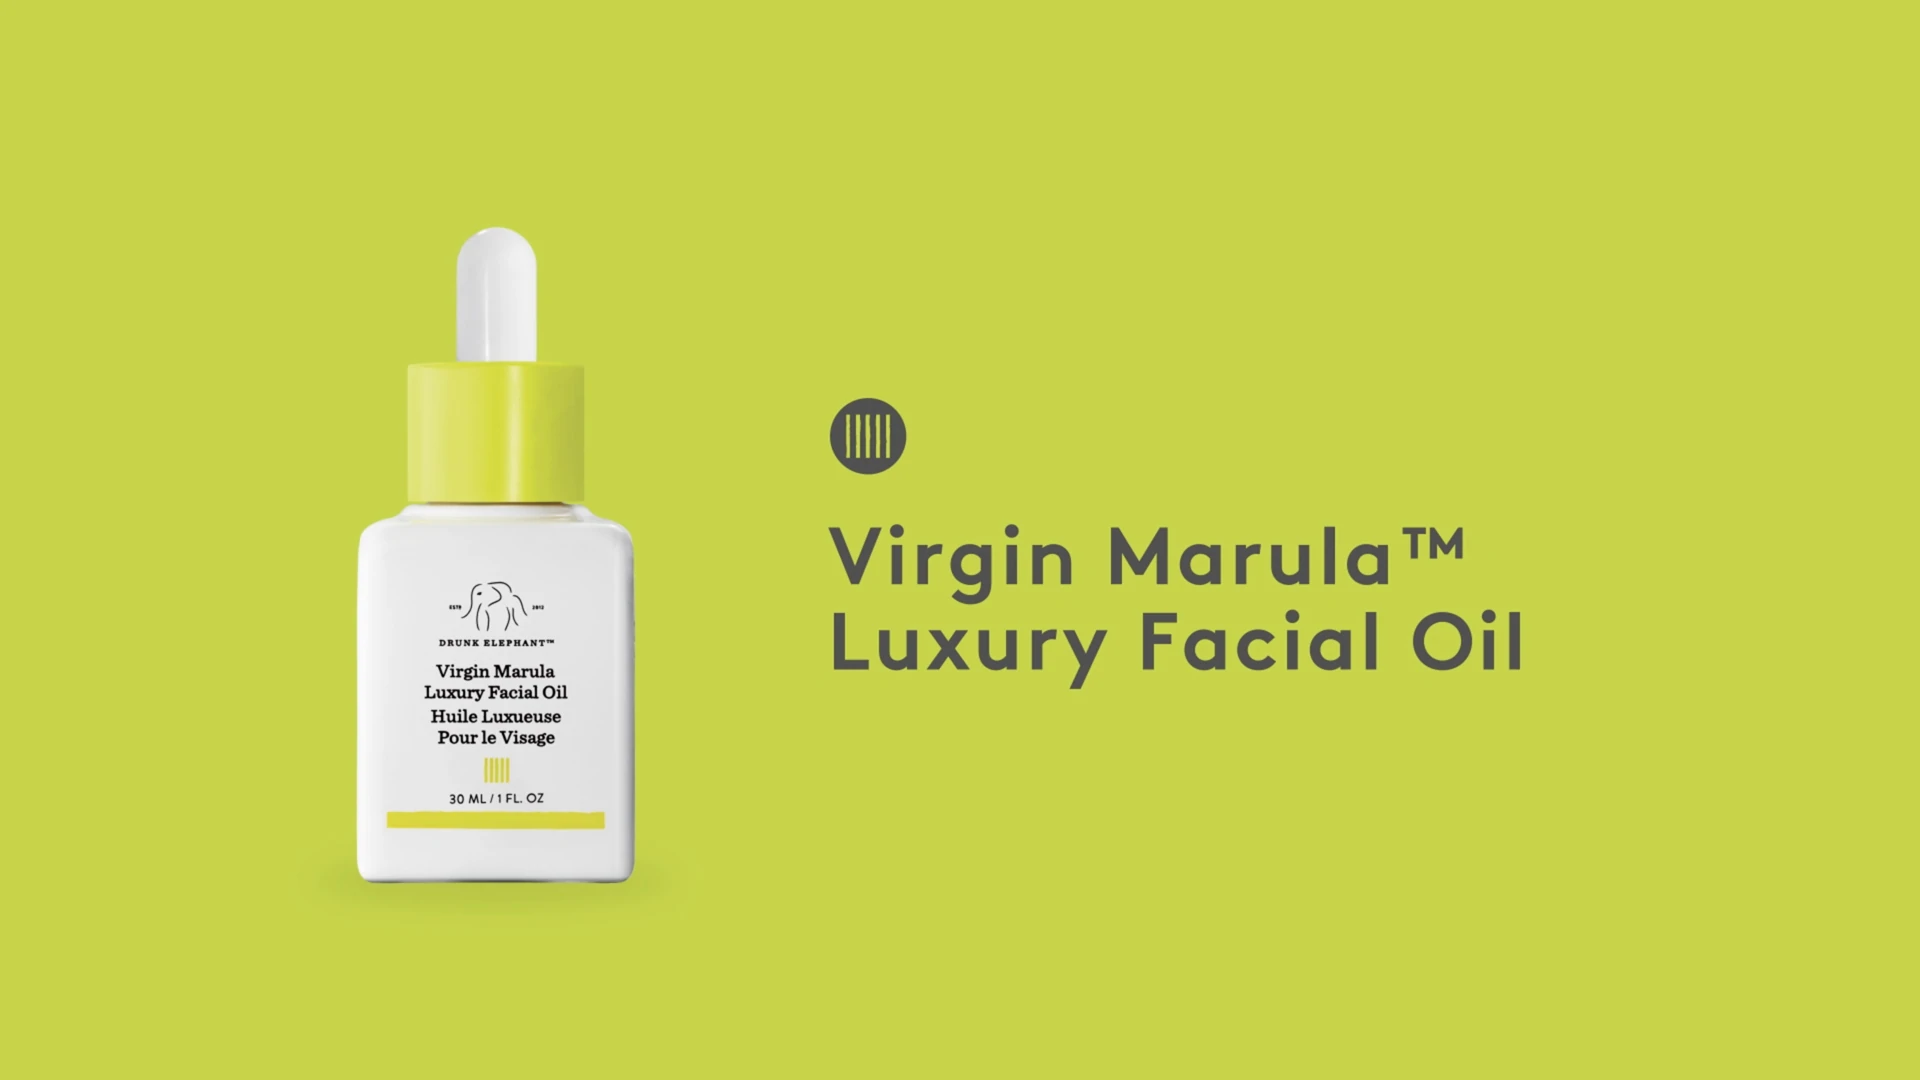 video explaining the benefits of Virgin Marula Face Oil